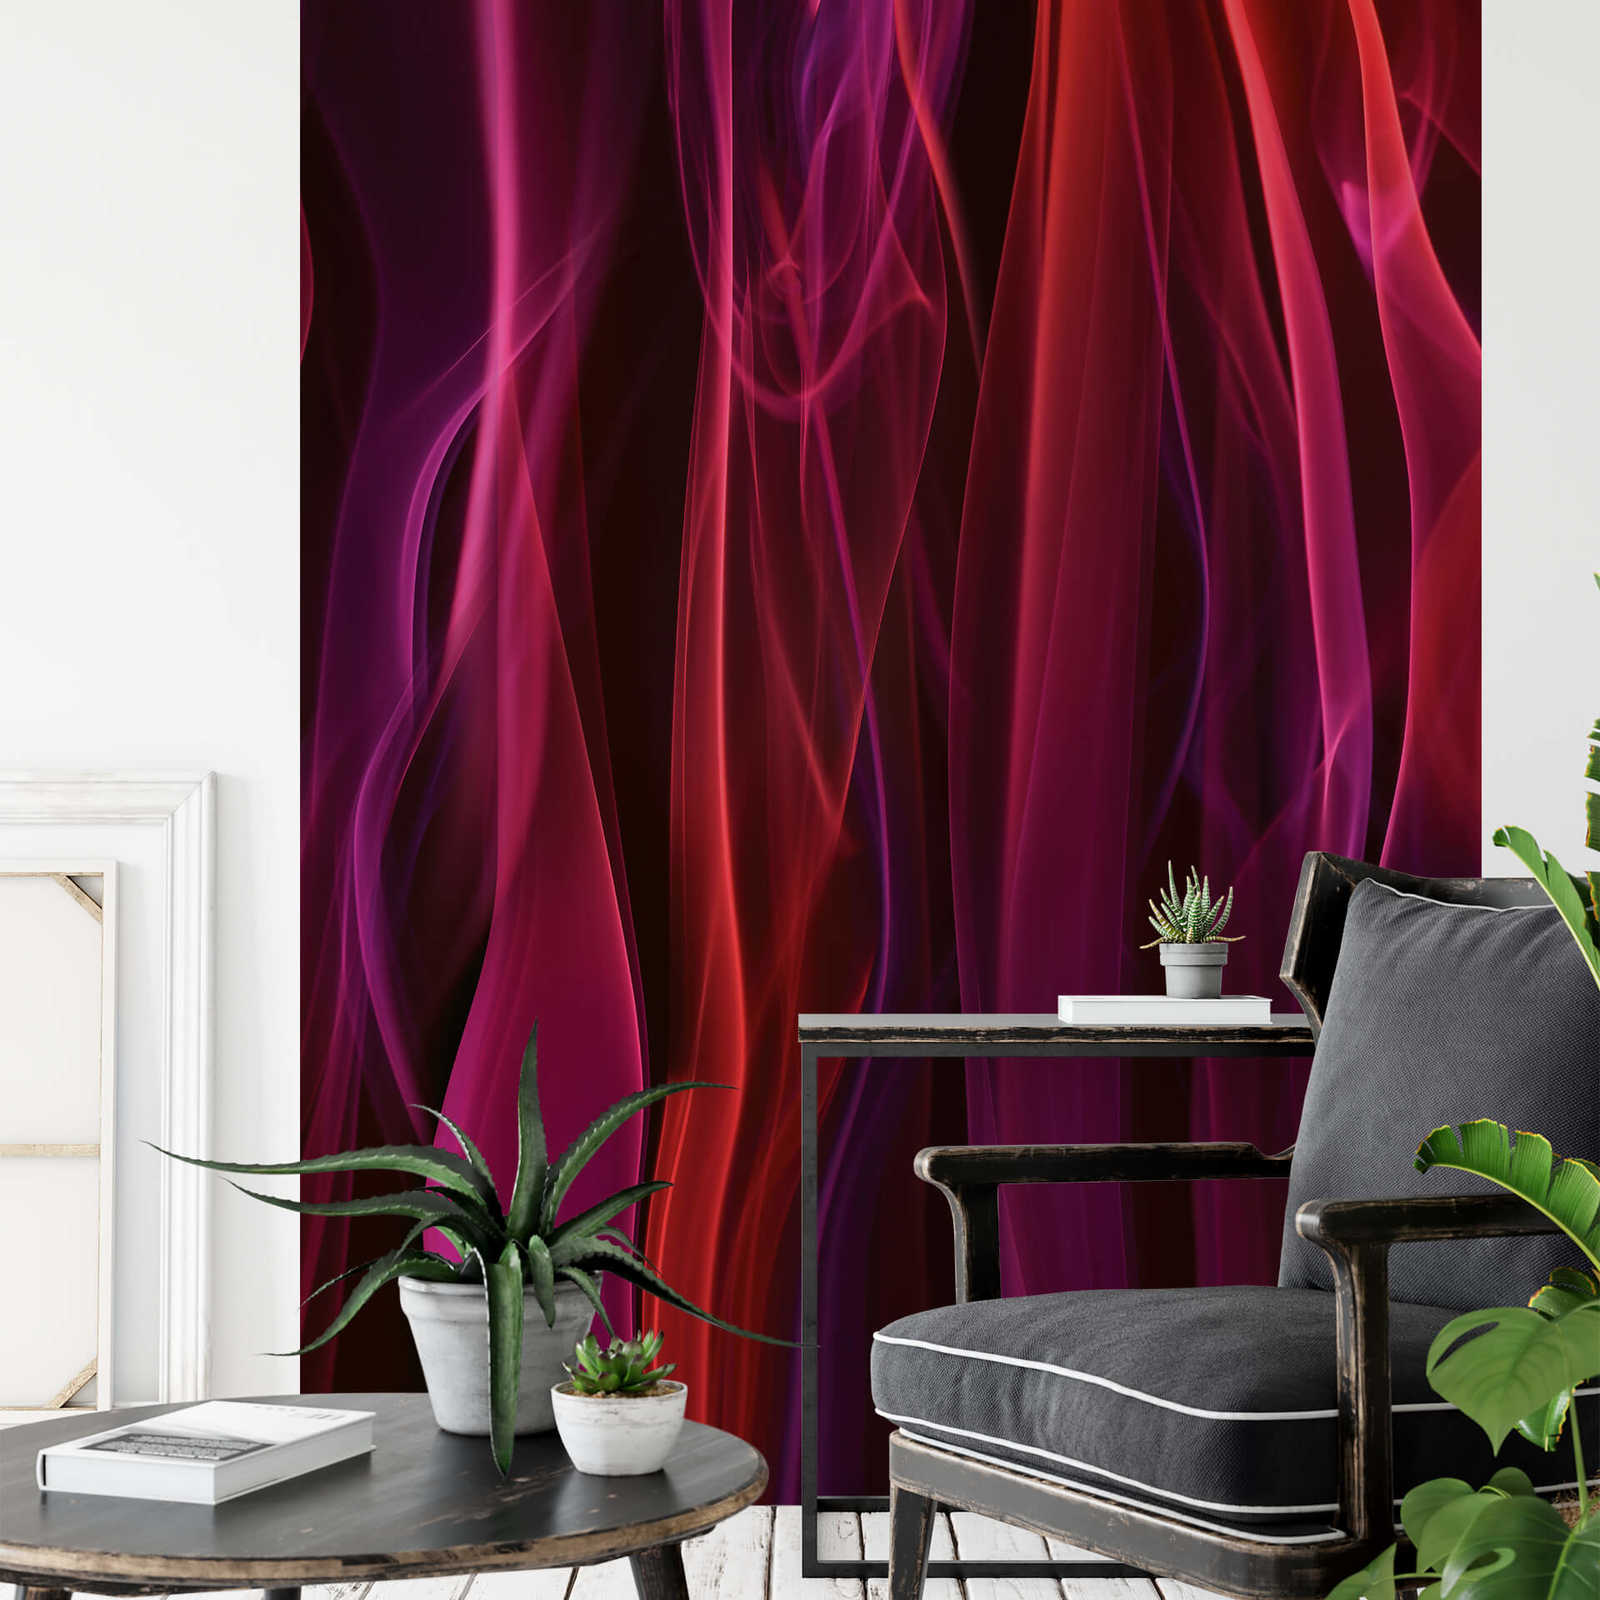             Photo wallpaper colourful smoke - red, purple, black
        